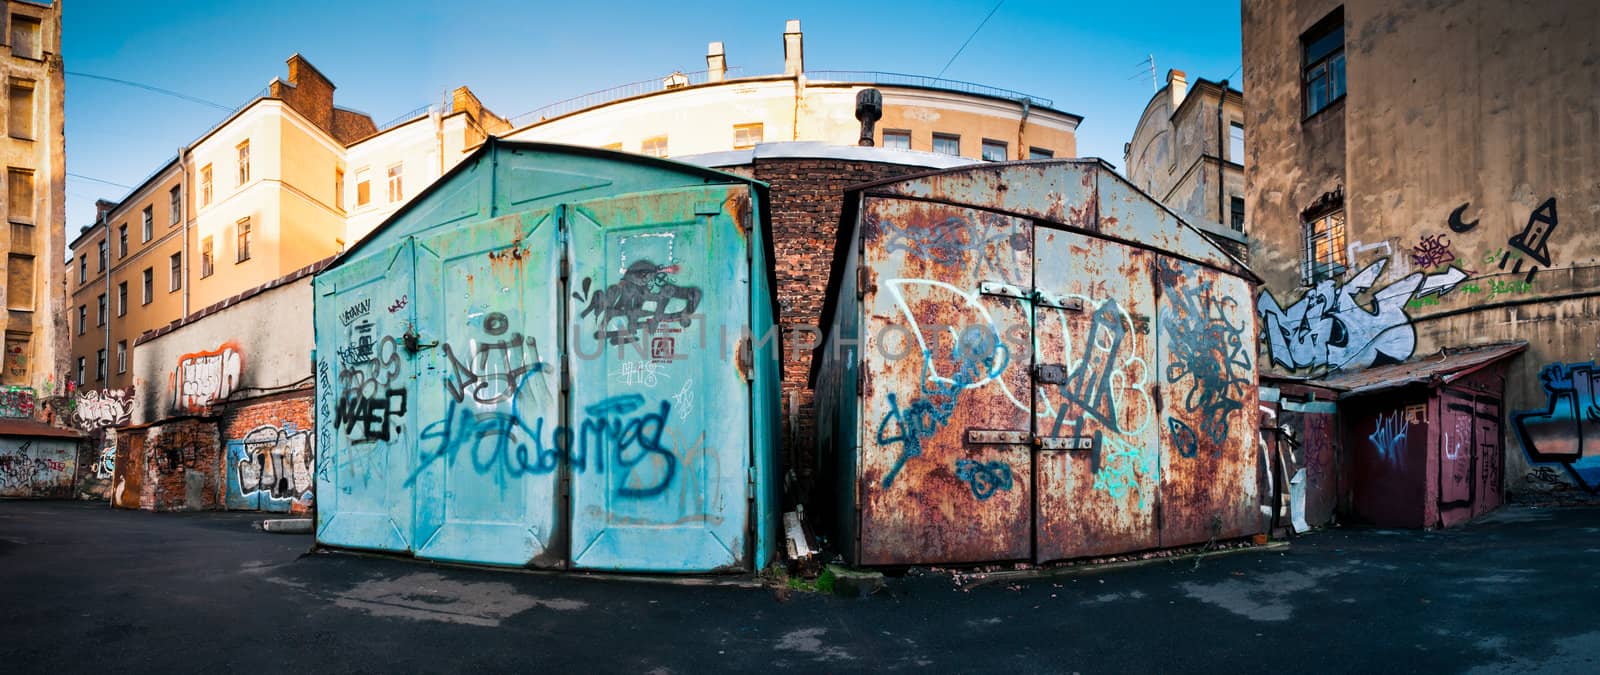 Old and rusty garages by dmitryelagin